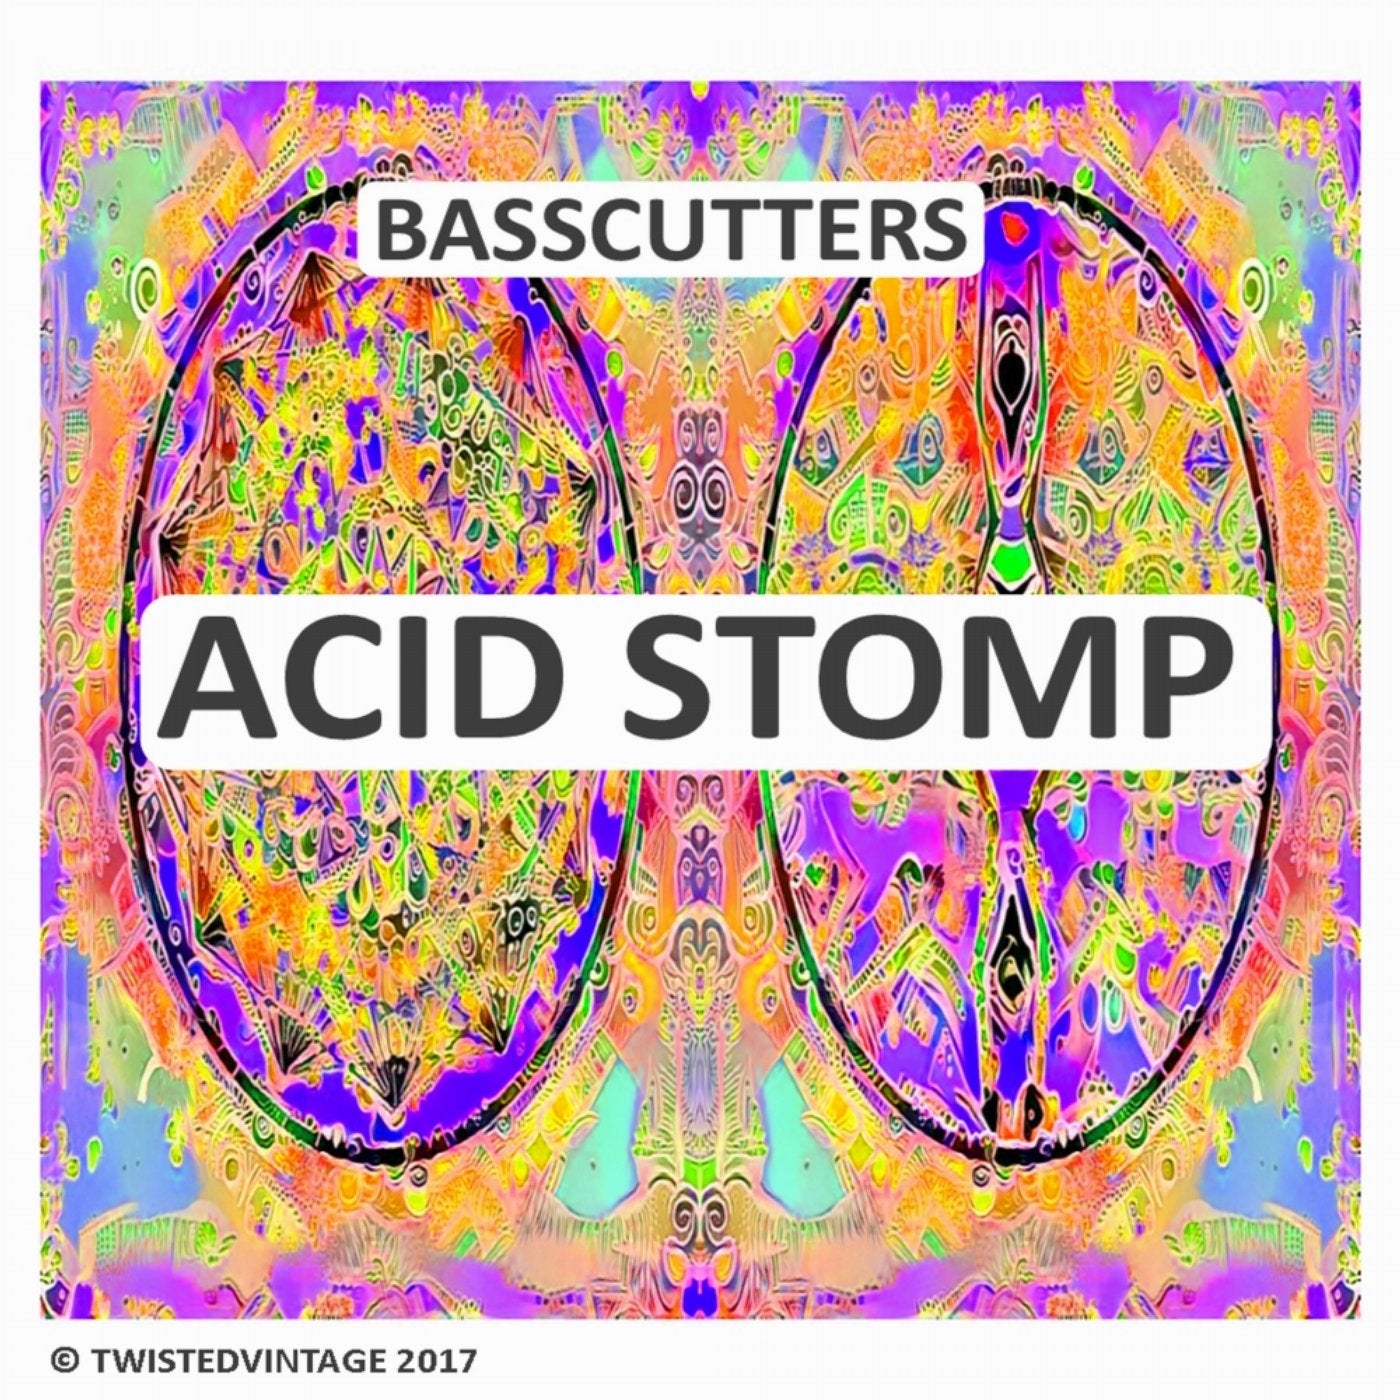 Acid Stomp